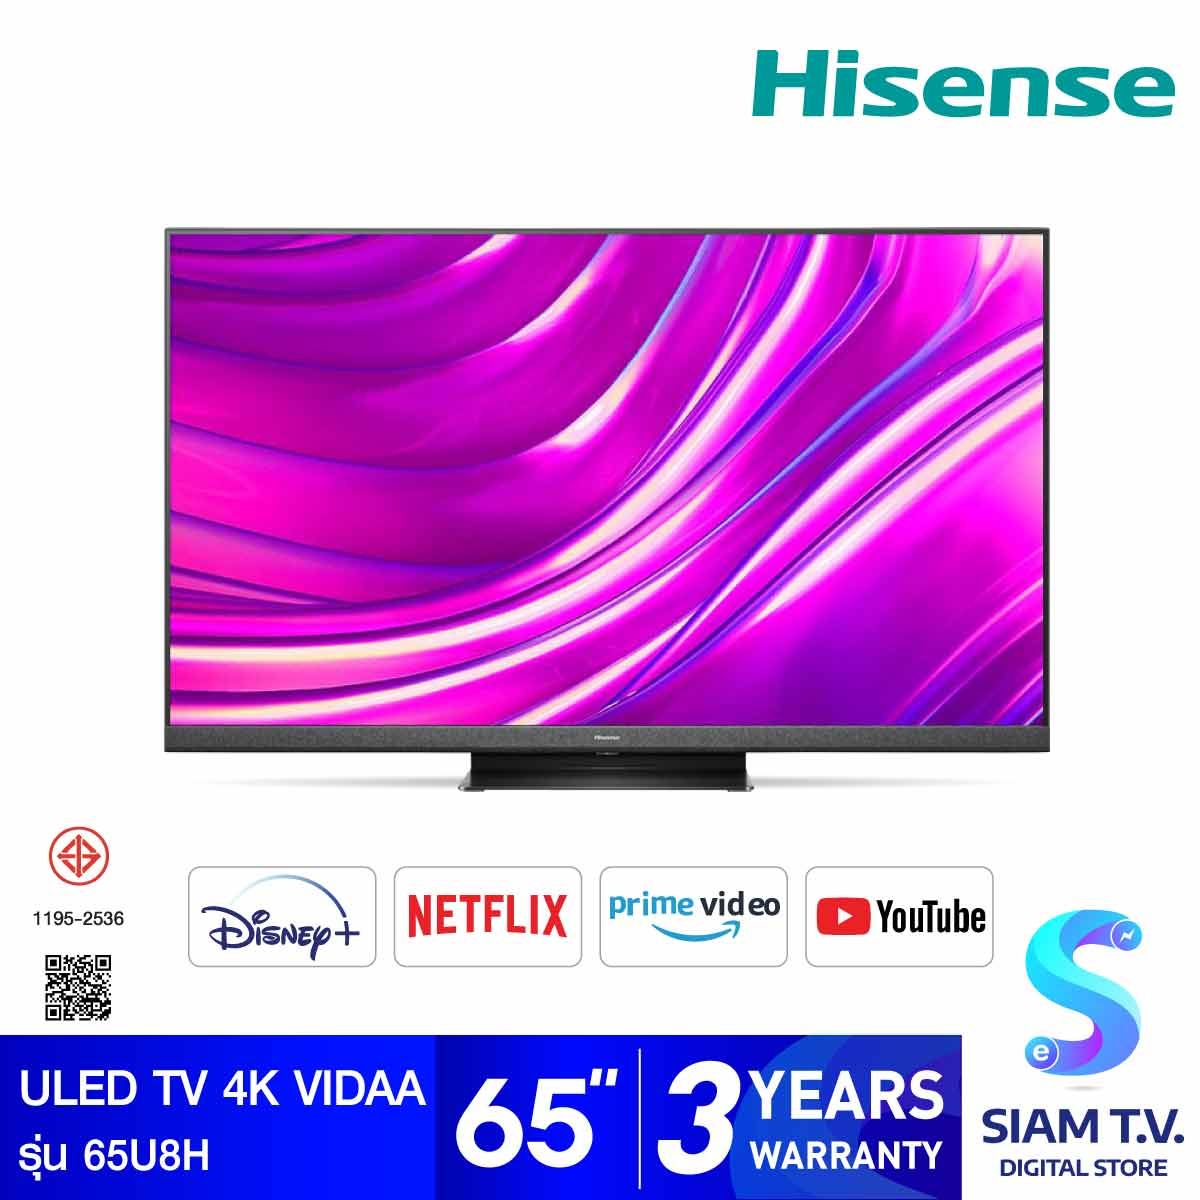 Hisense Mini-LED ULED TV 4K VIDAA 120Hz รุ่น 65U8H สมาร์ททีวีขนาด 65 นิ้ว